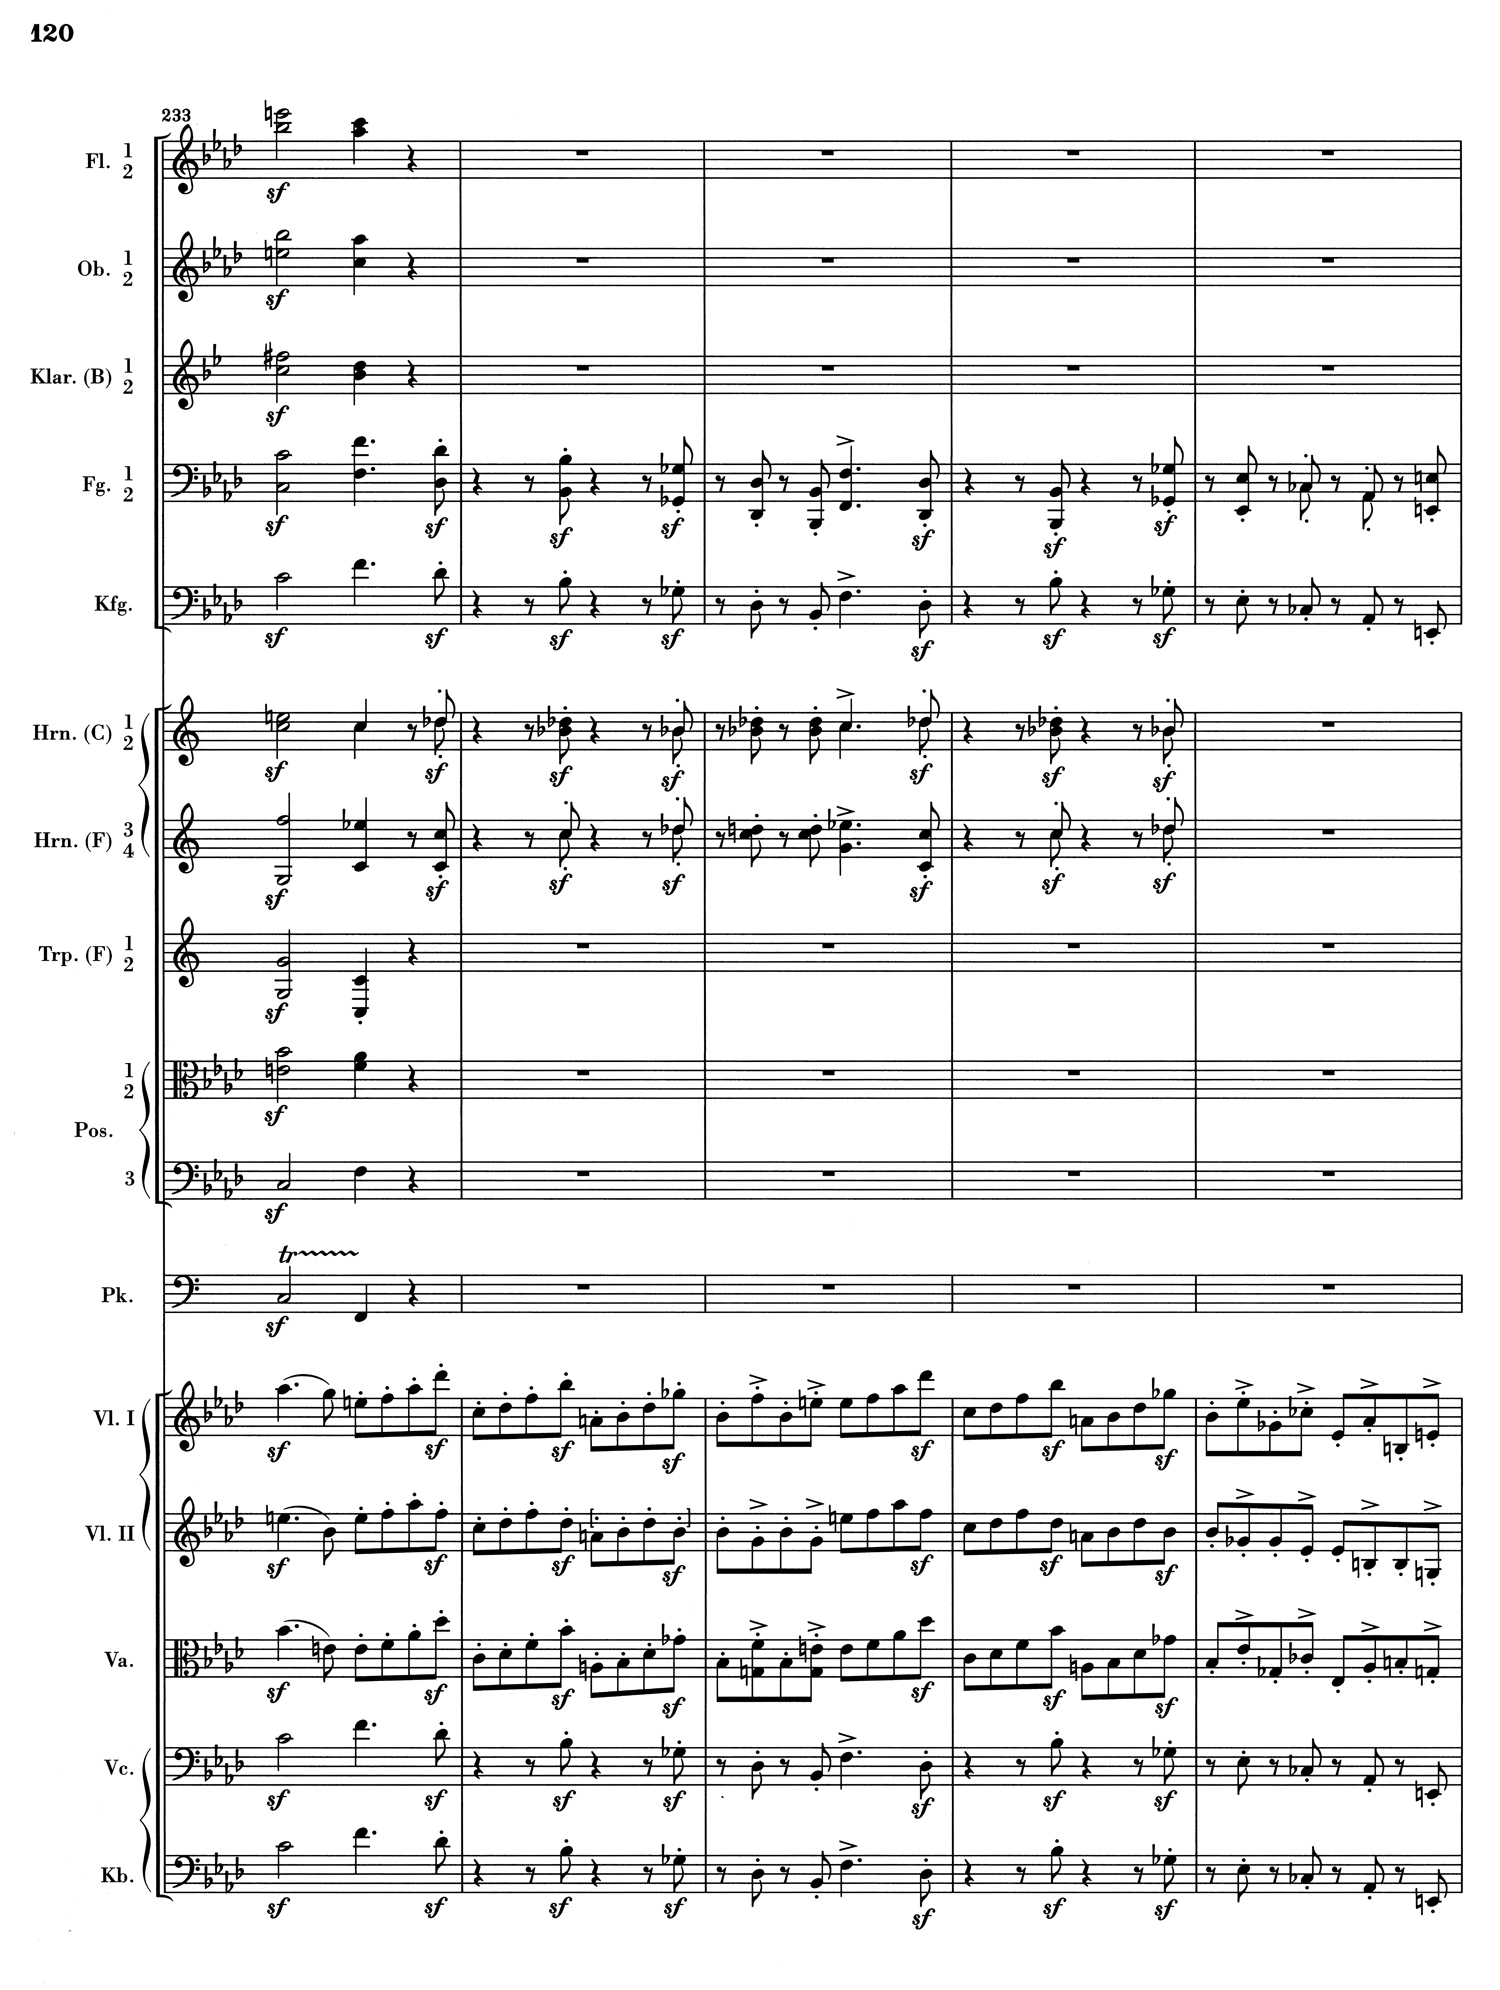 Brahms 3 Score 13.jpg